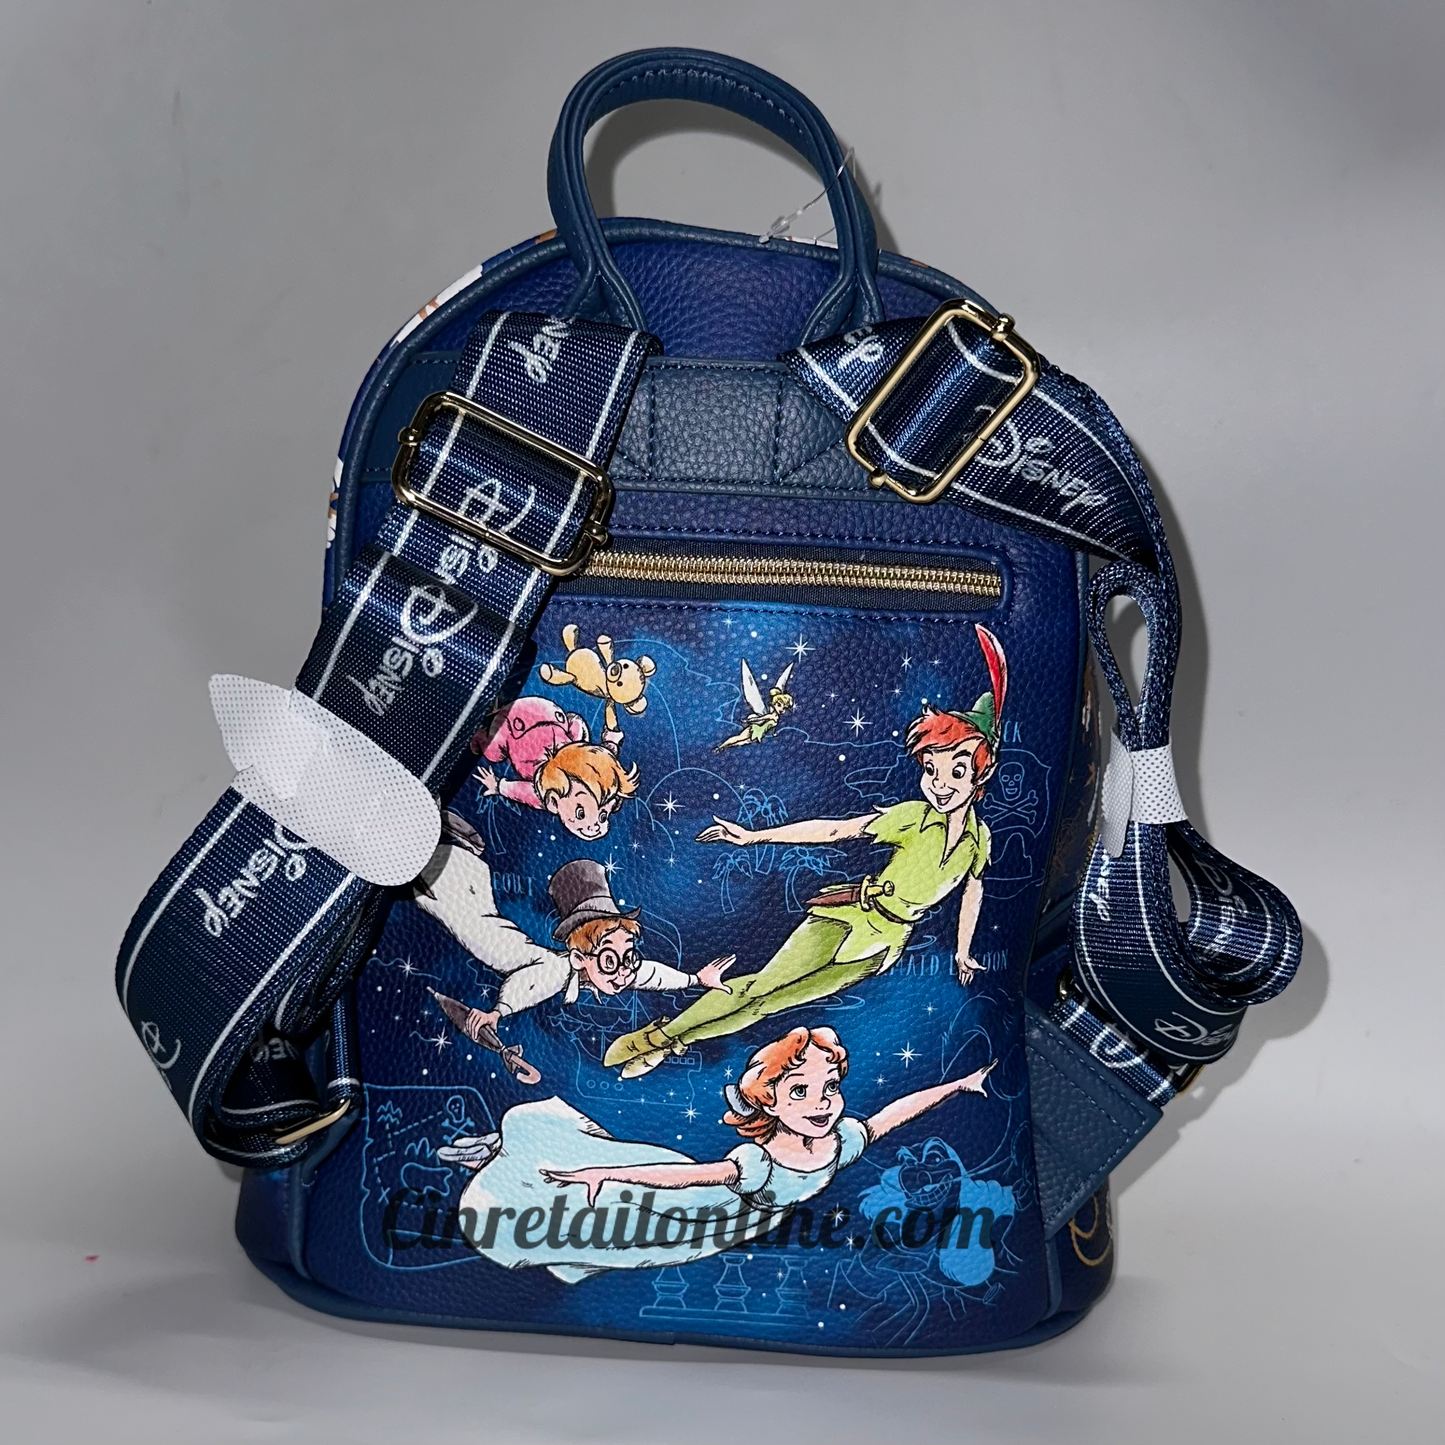 Peter Pan Disney Backpack